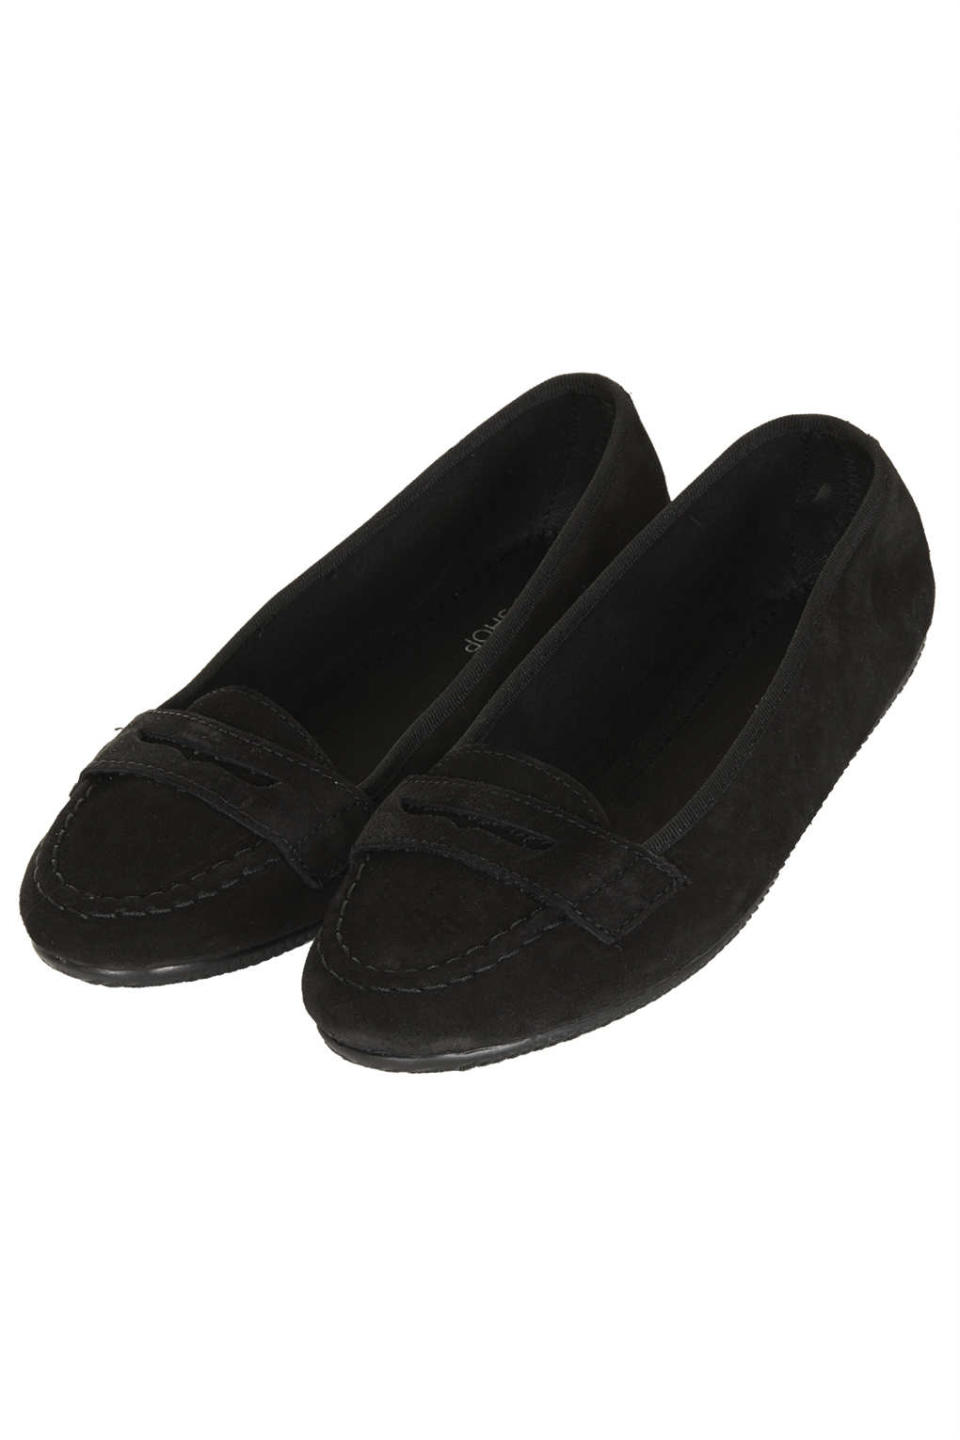 Topshop black loafers